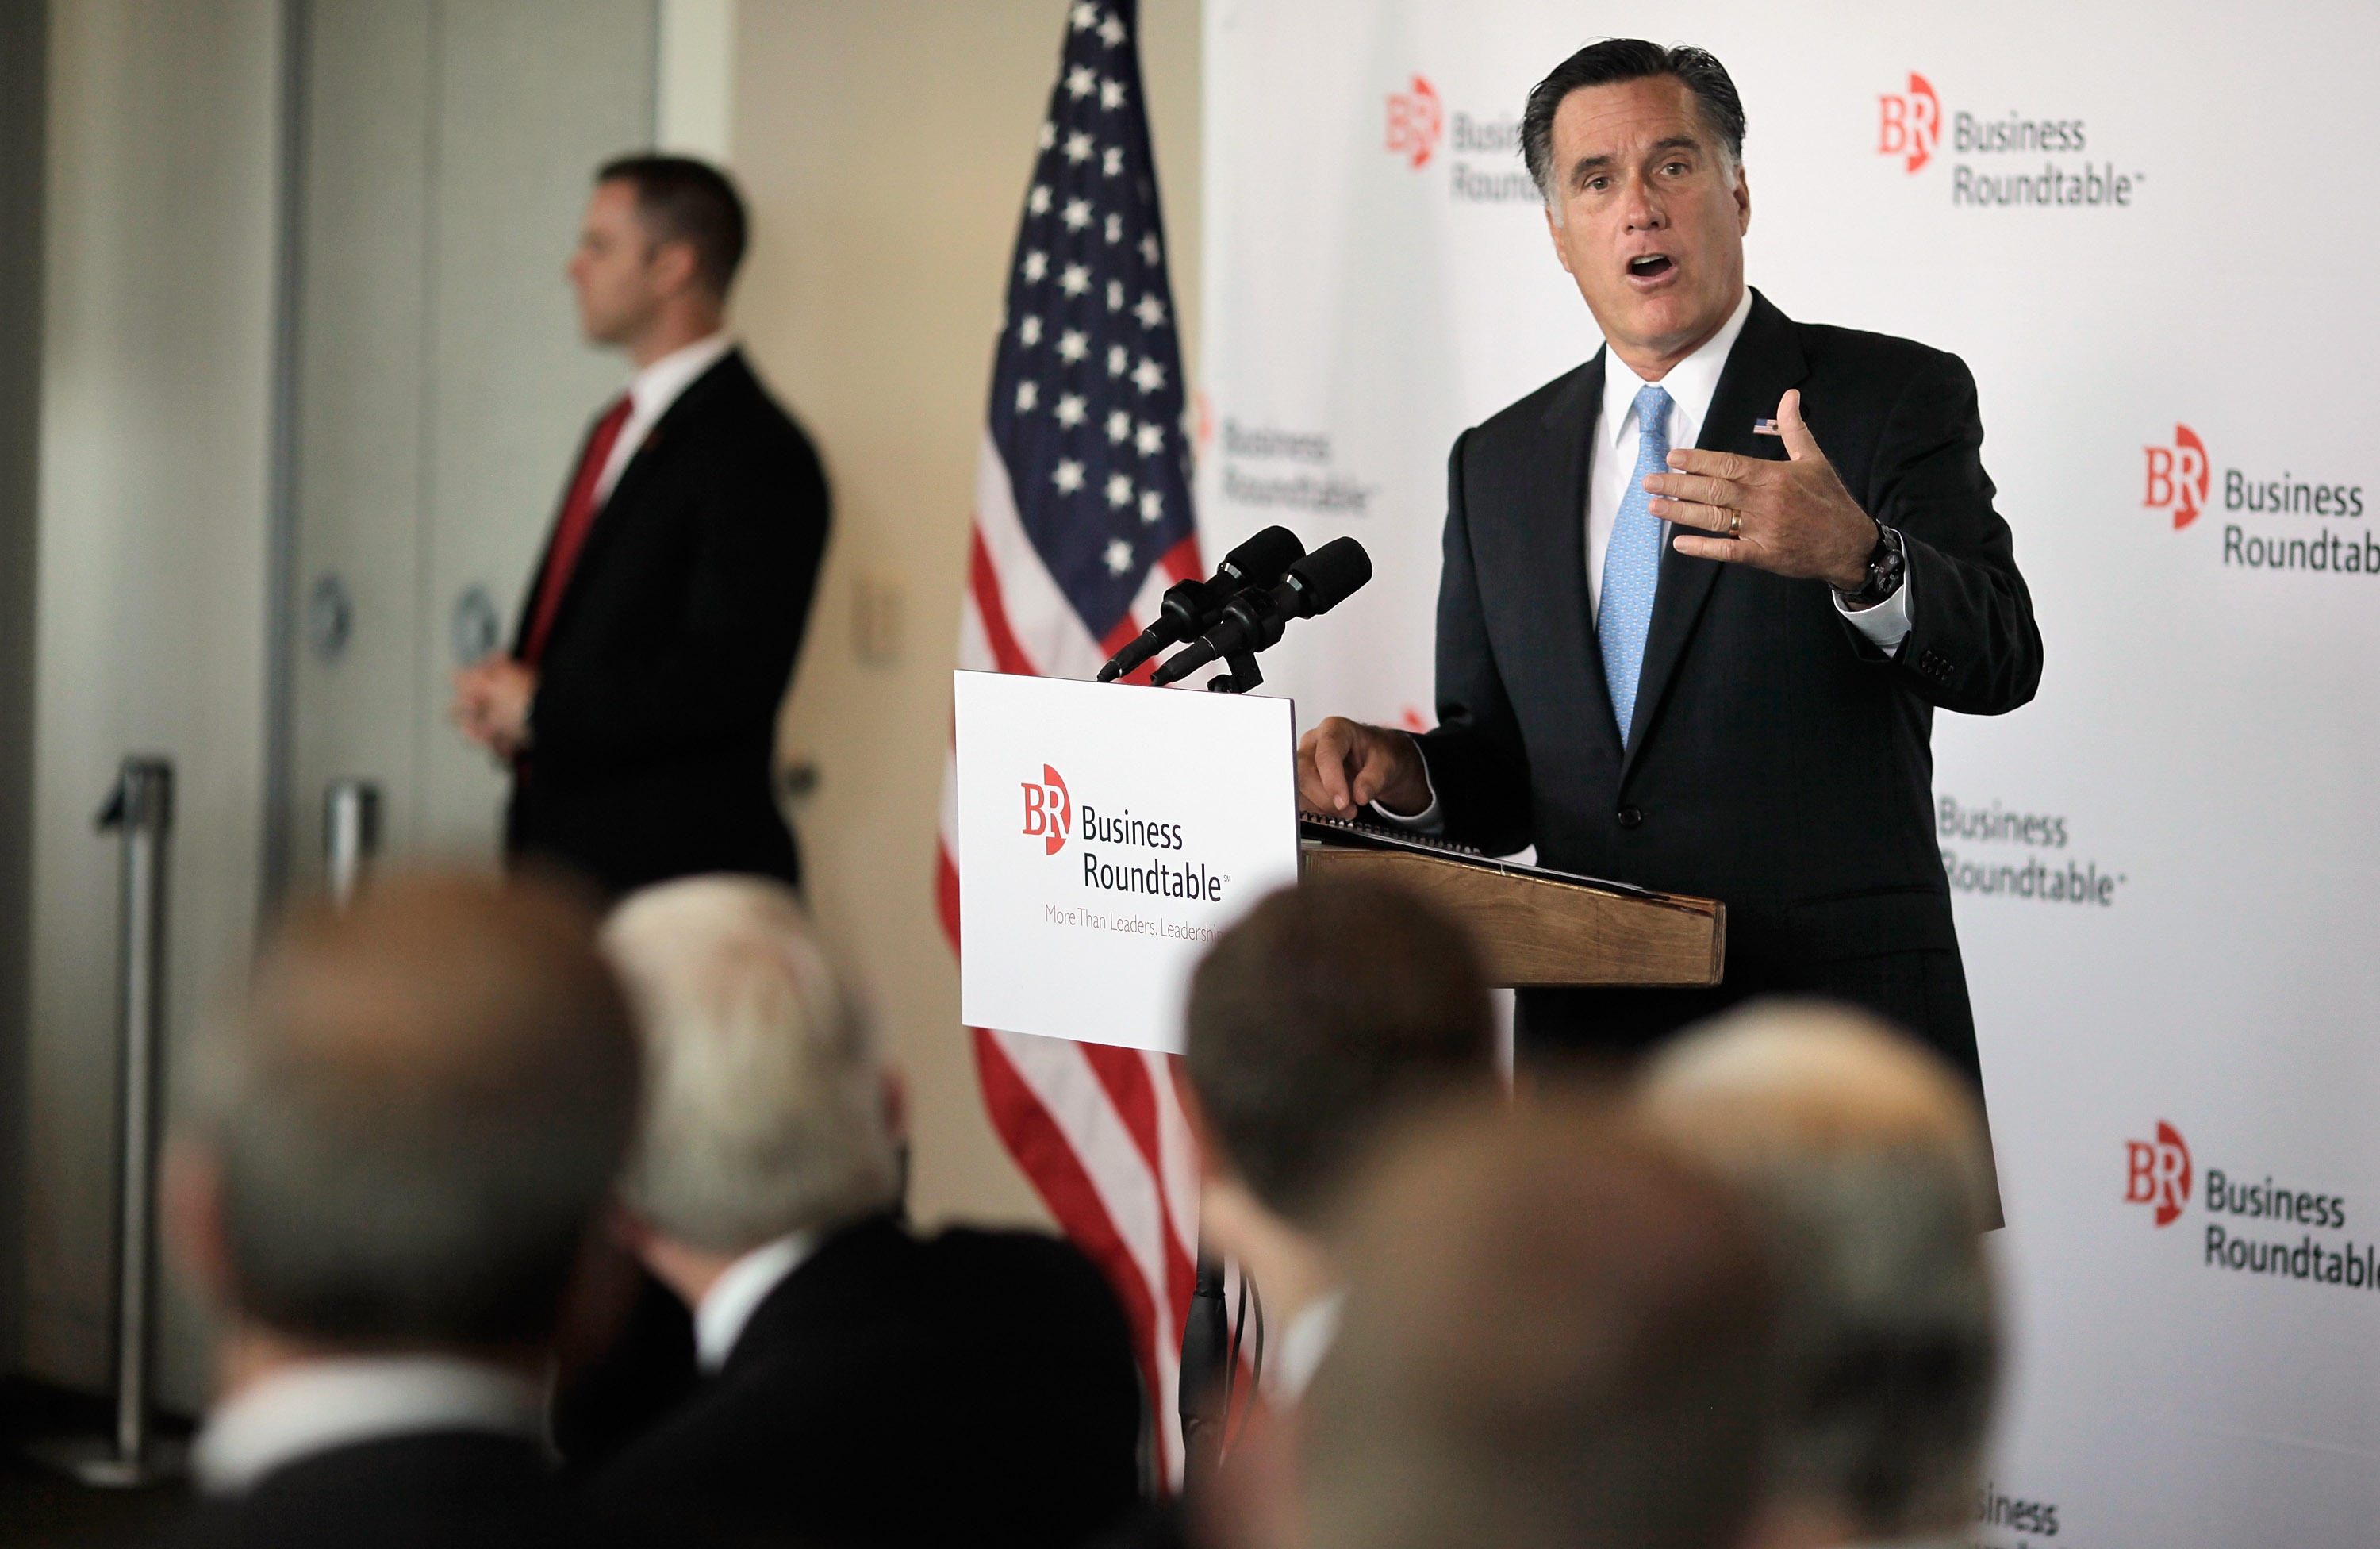 John Avlon: "Romney is a political alien in his own home states"